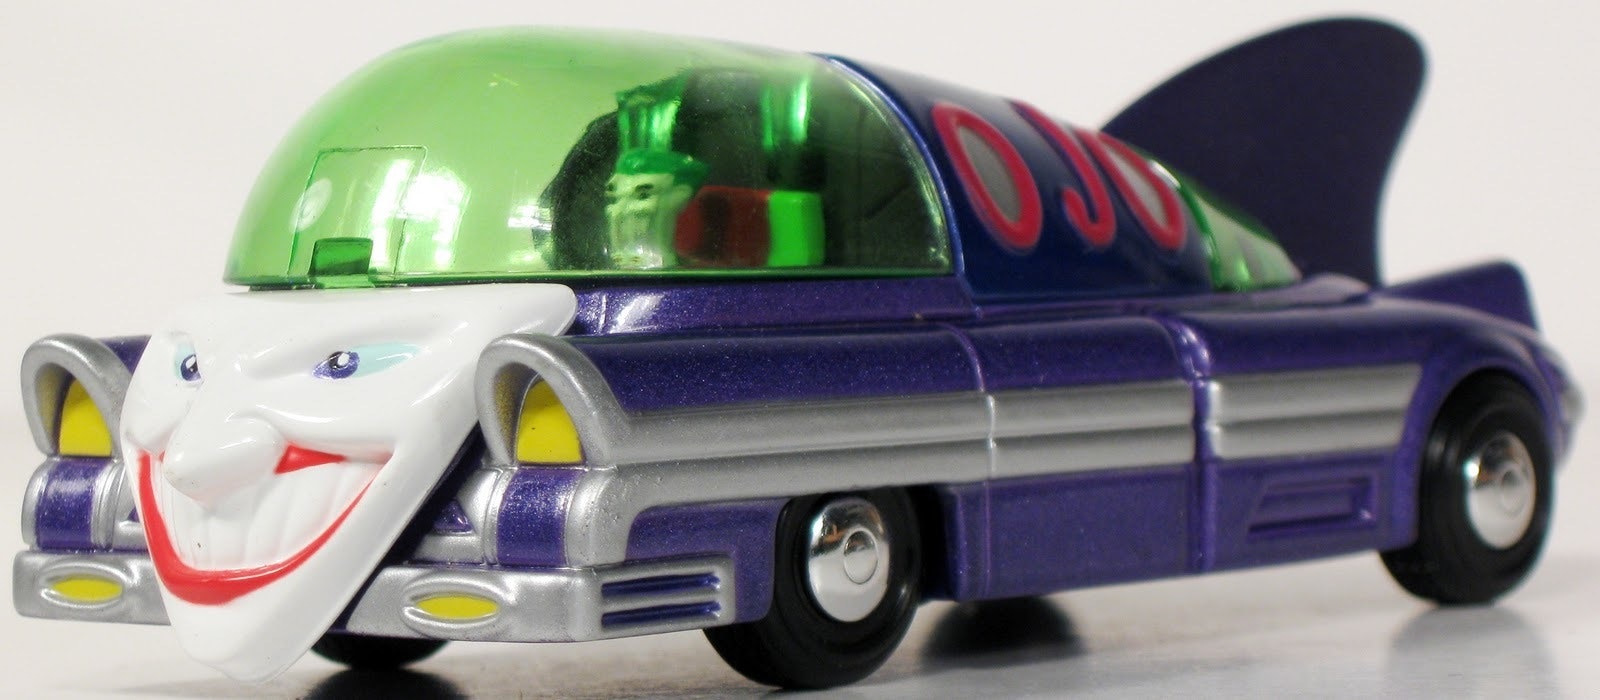 joker car toy